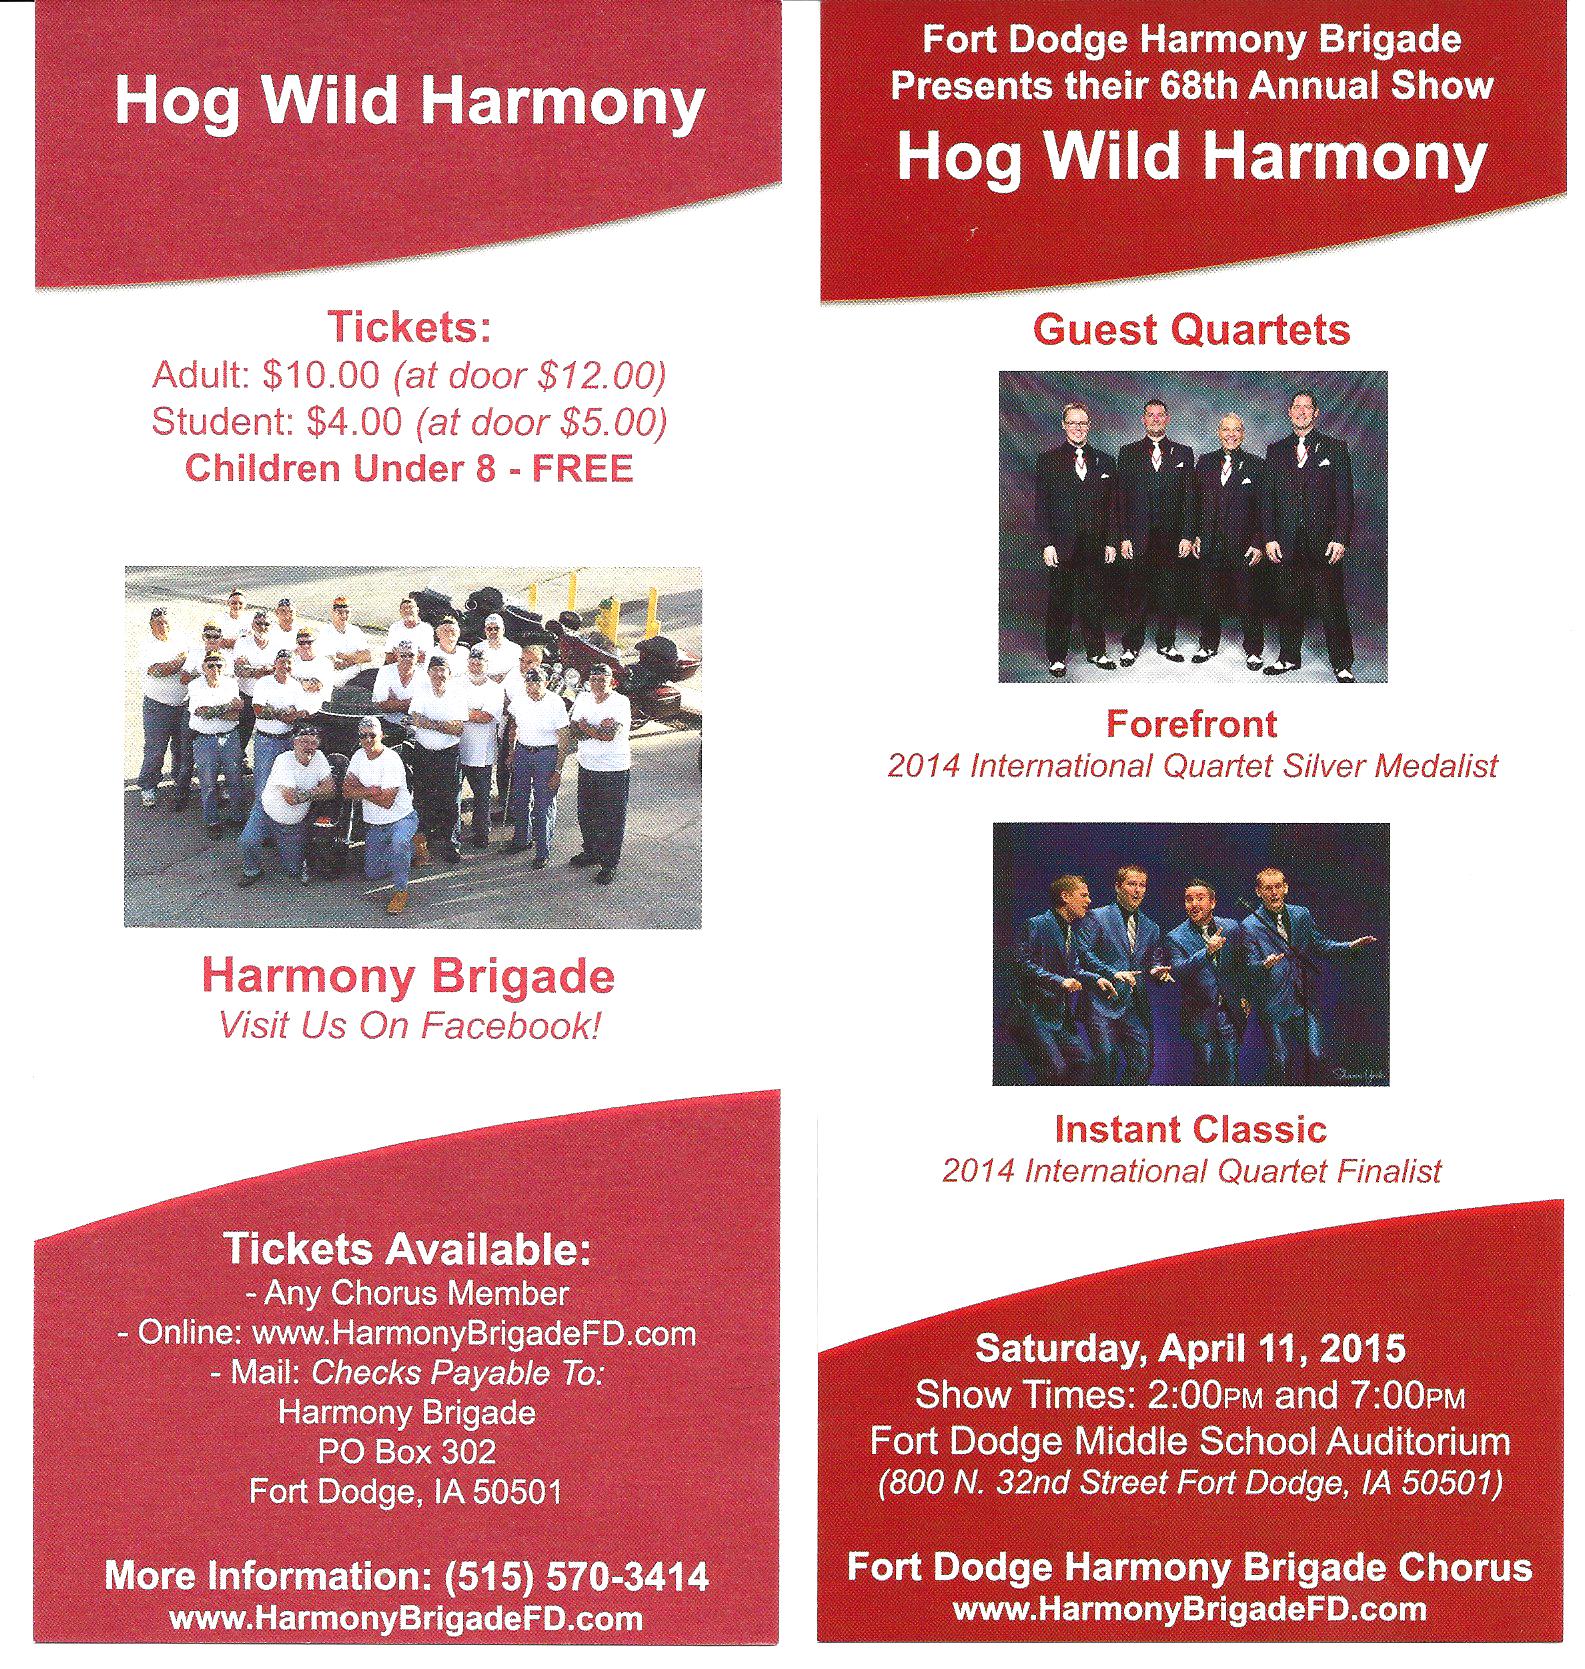 Hog Wild Harmony - Motorcycle Gang Performance Information